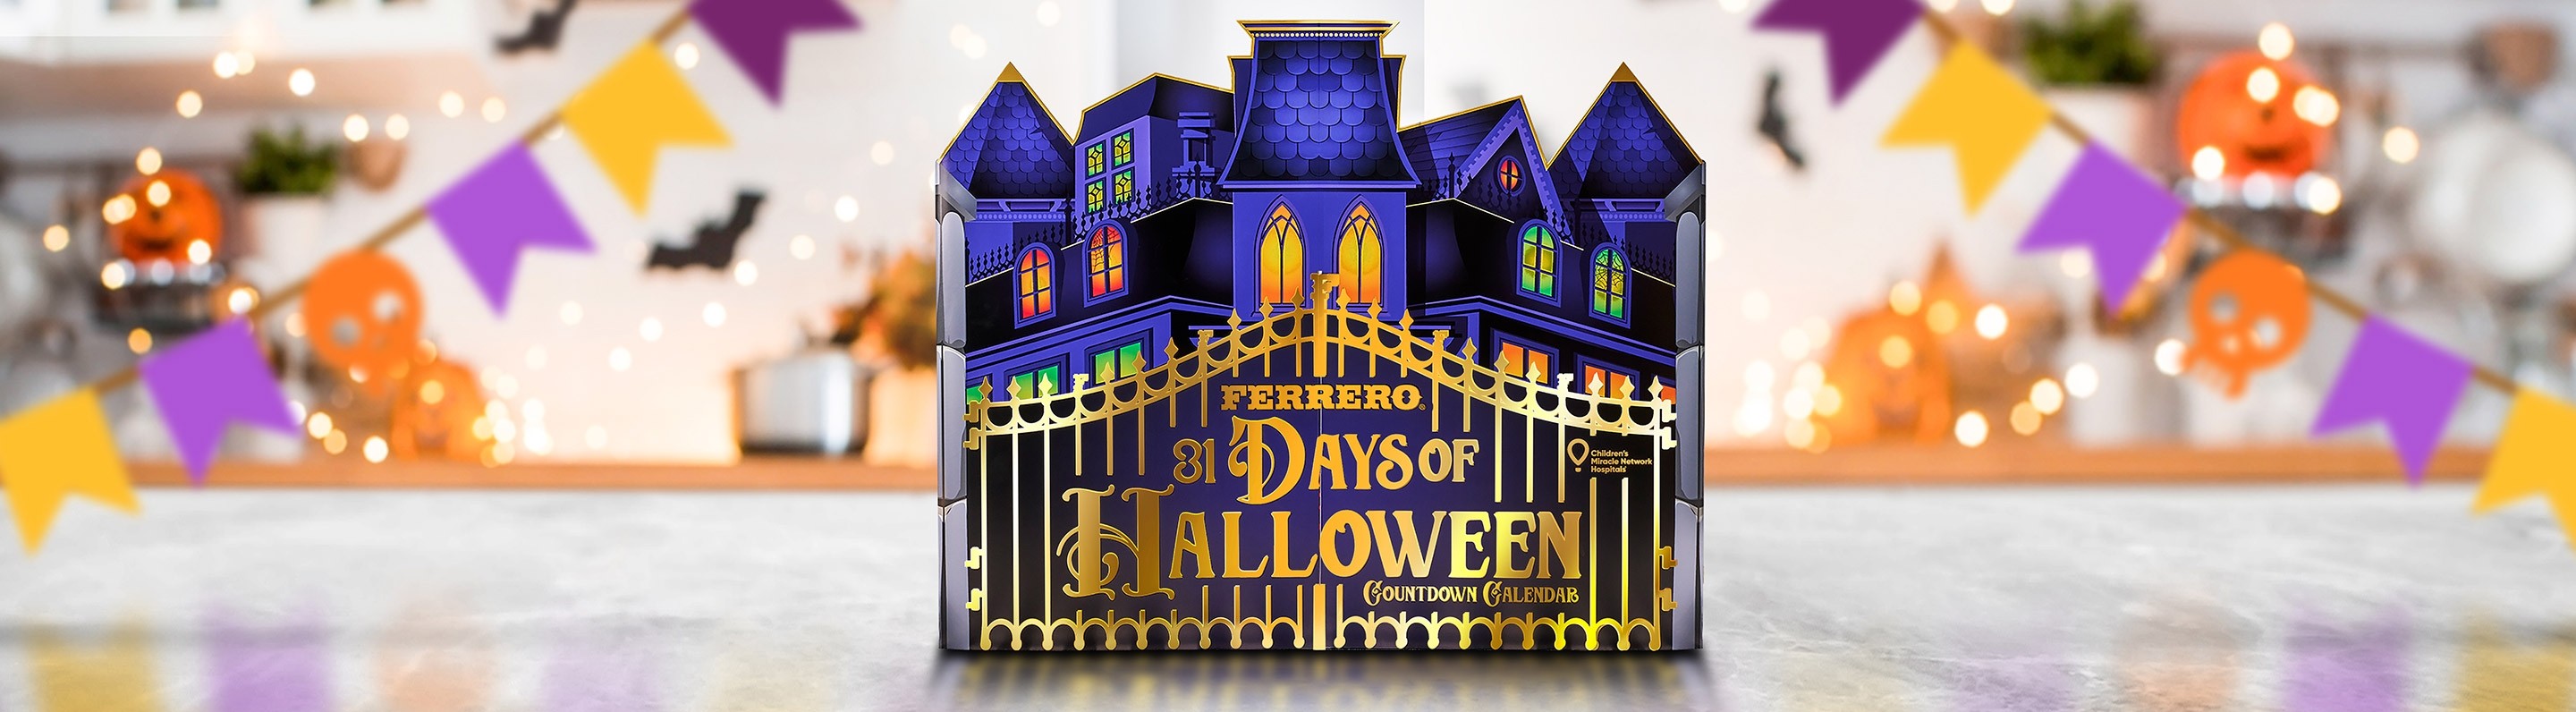 Celebrate Halloween All October Long with Ferrero’s 31 Days of Halloween Countdown Calendar!